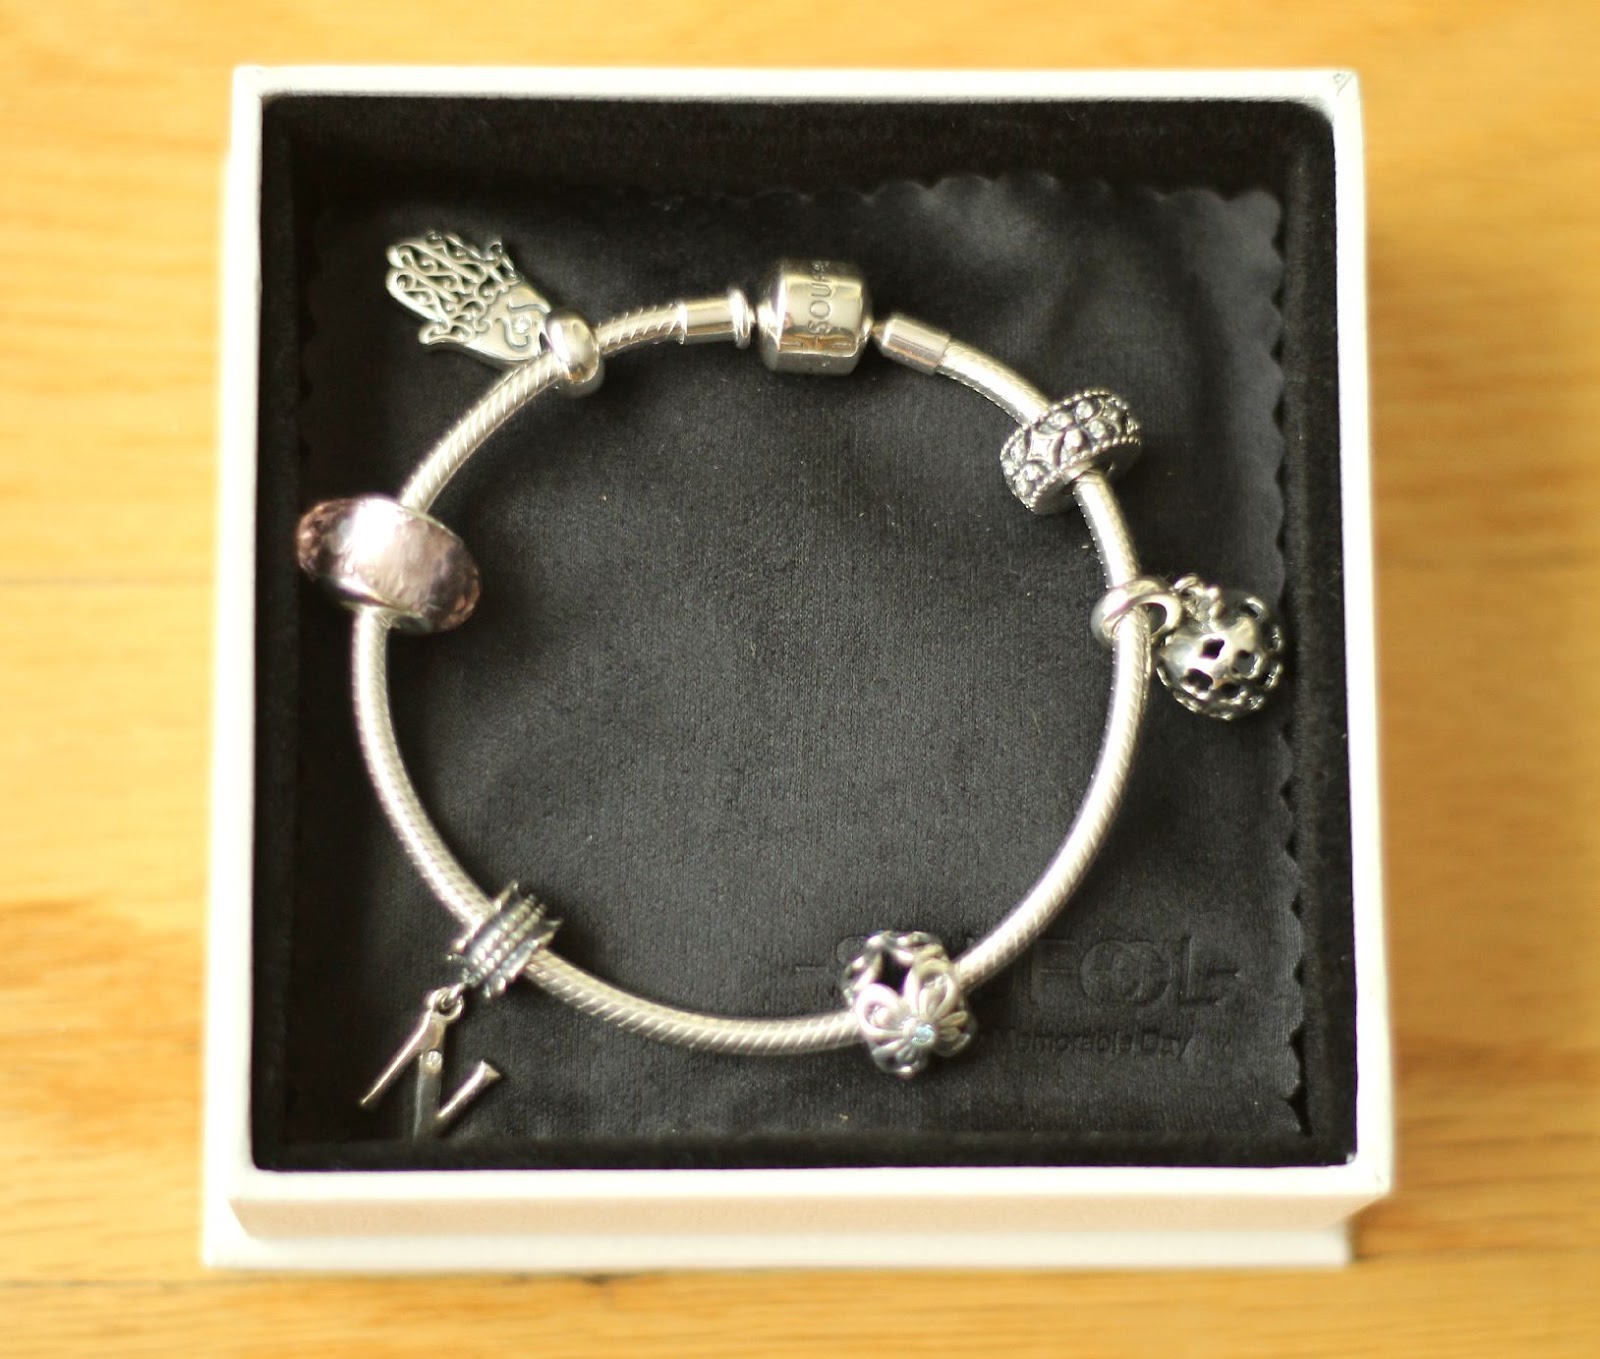 SOUFEEL Jewelry 925 Sterling Silver Charm Bracelet | Review